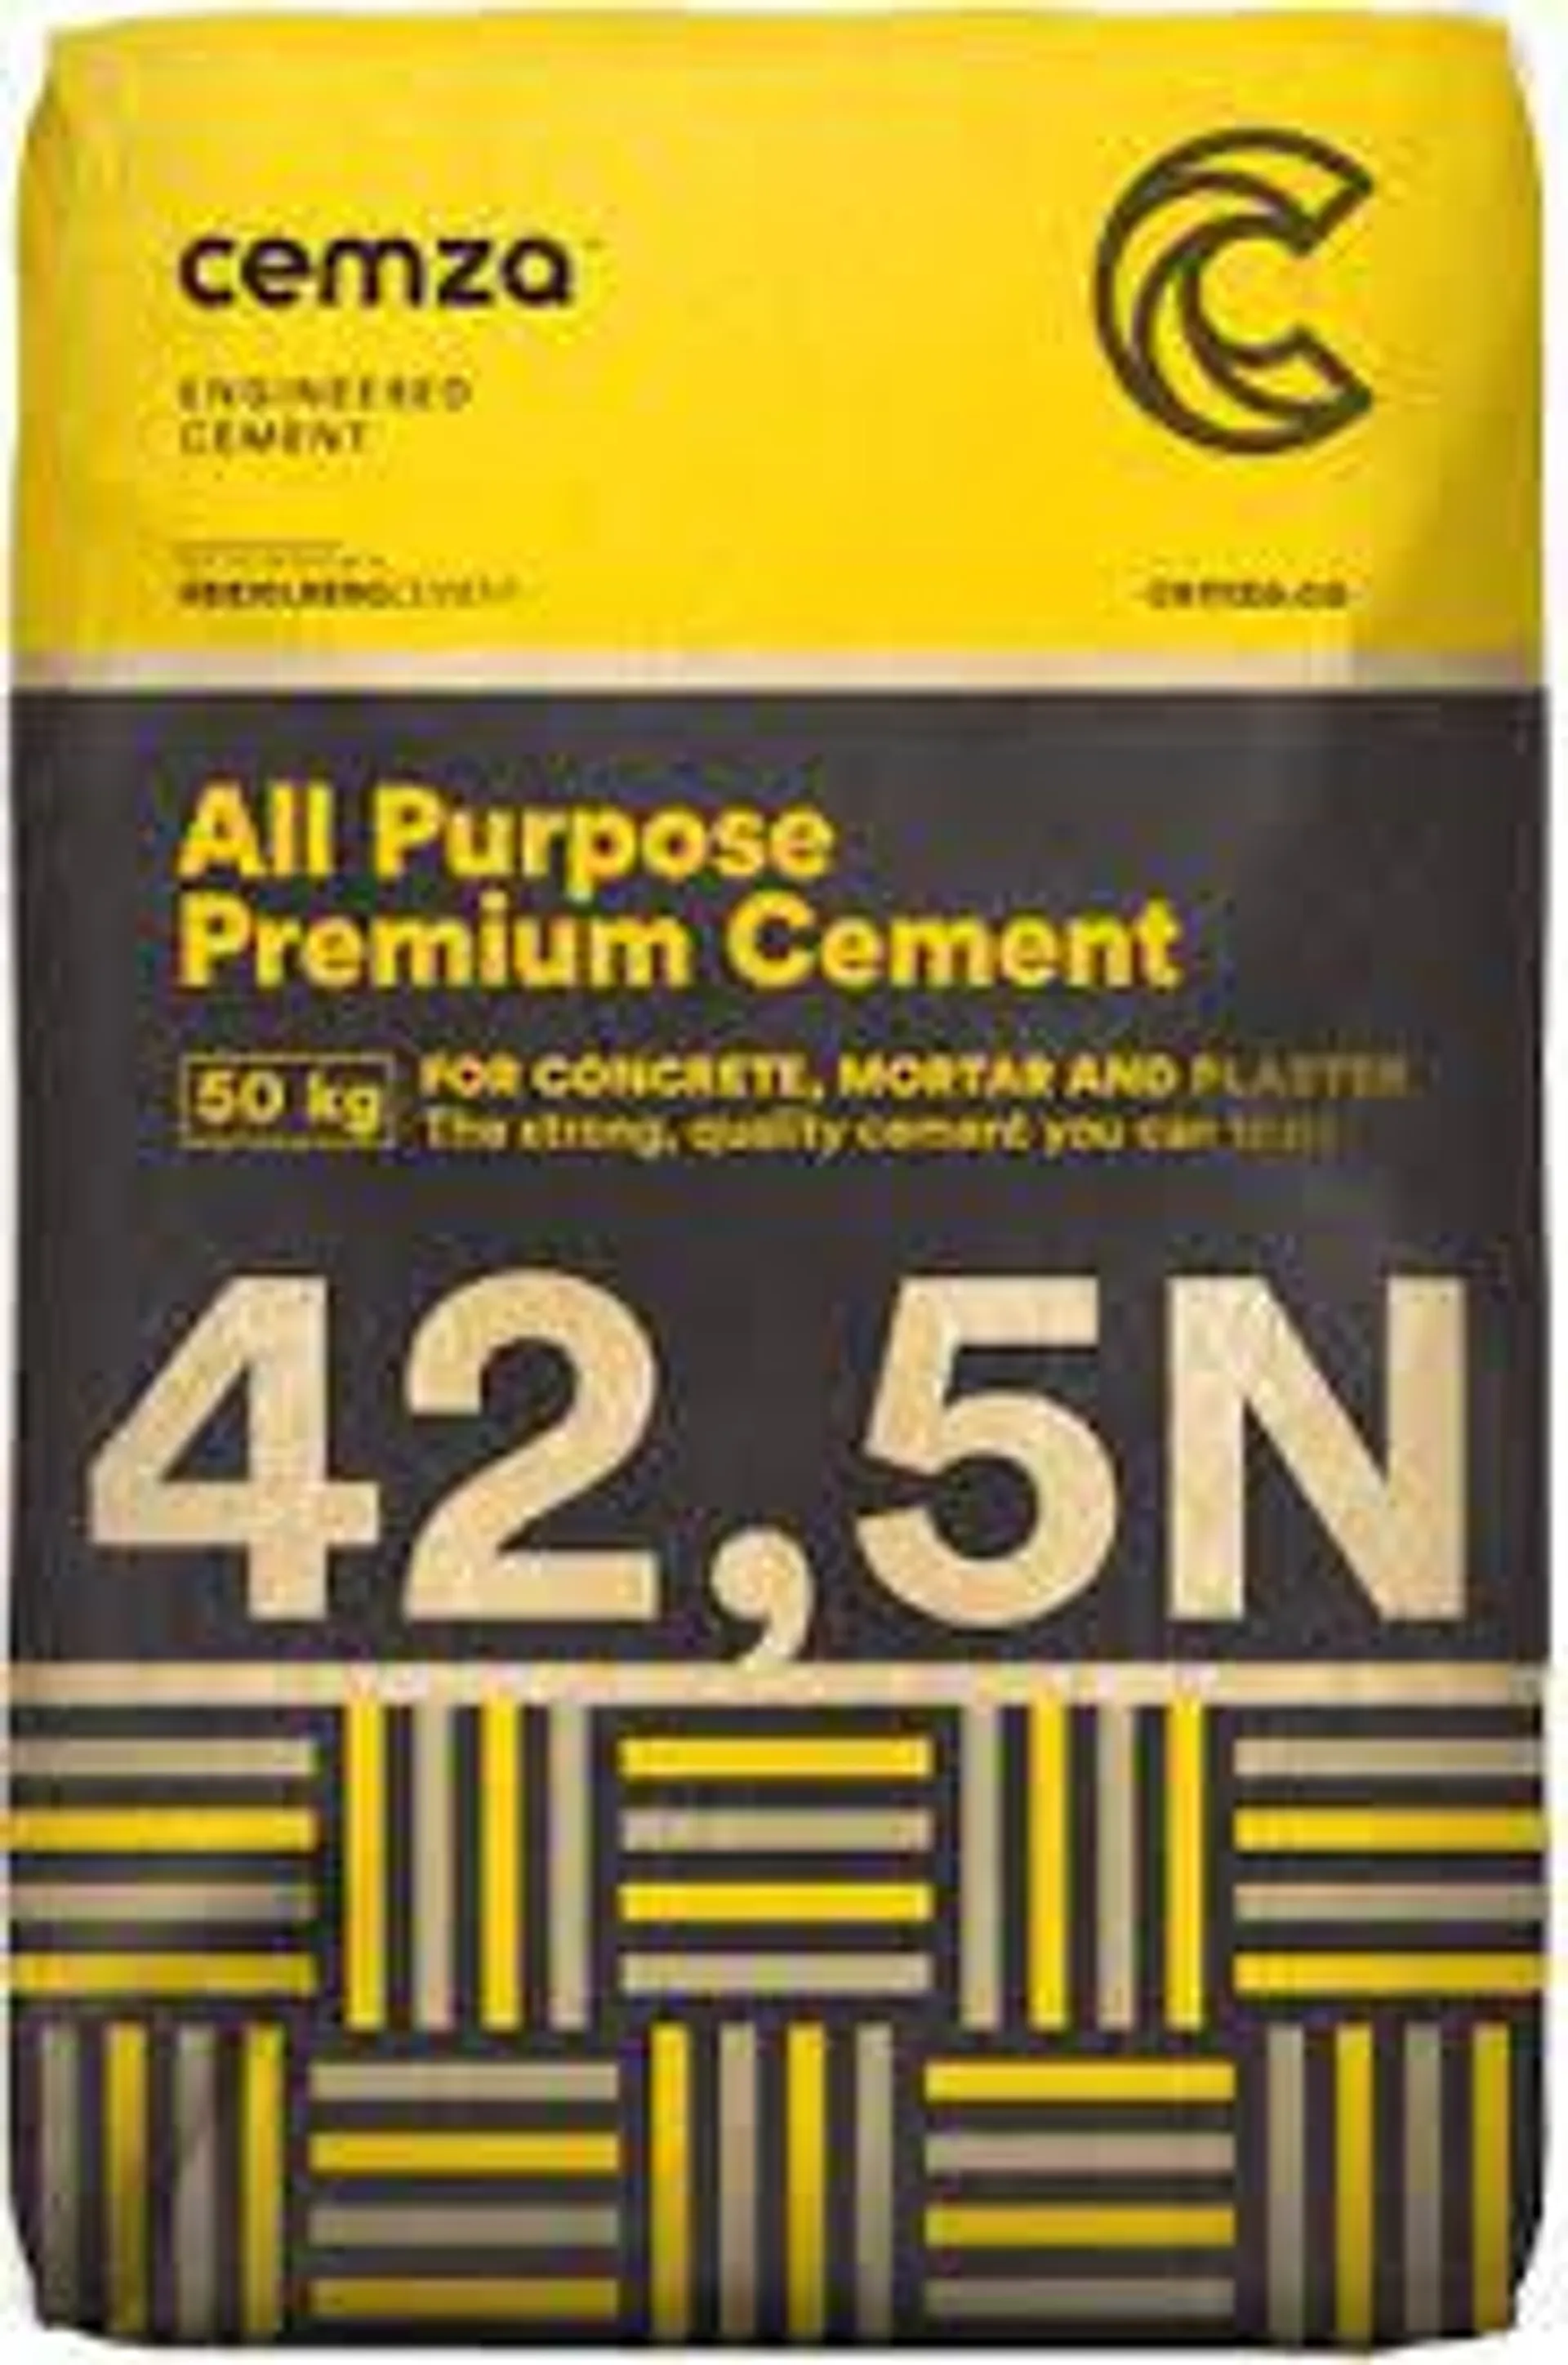 Cemza General Purpose Cement 42.5N 50kg